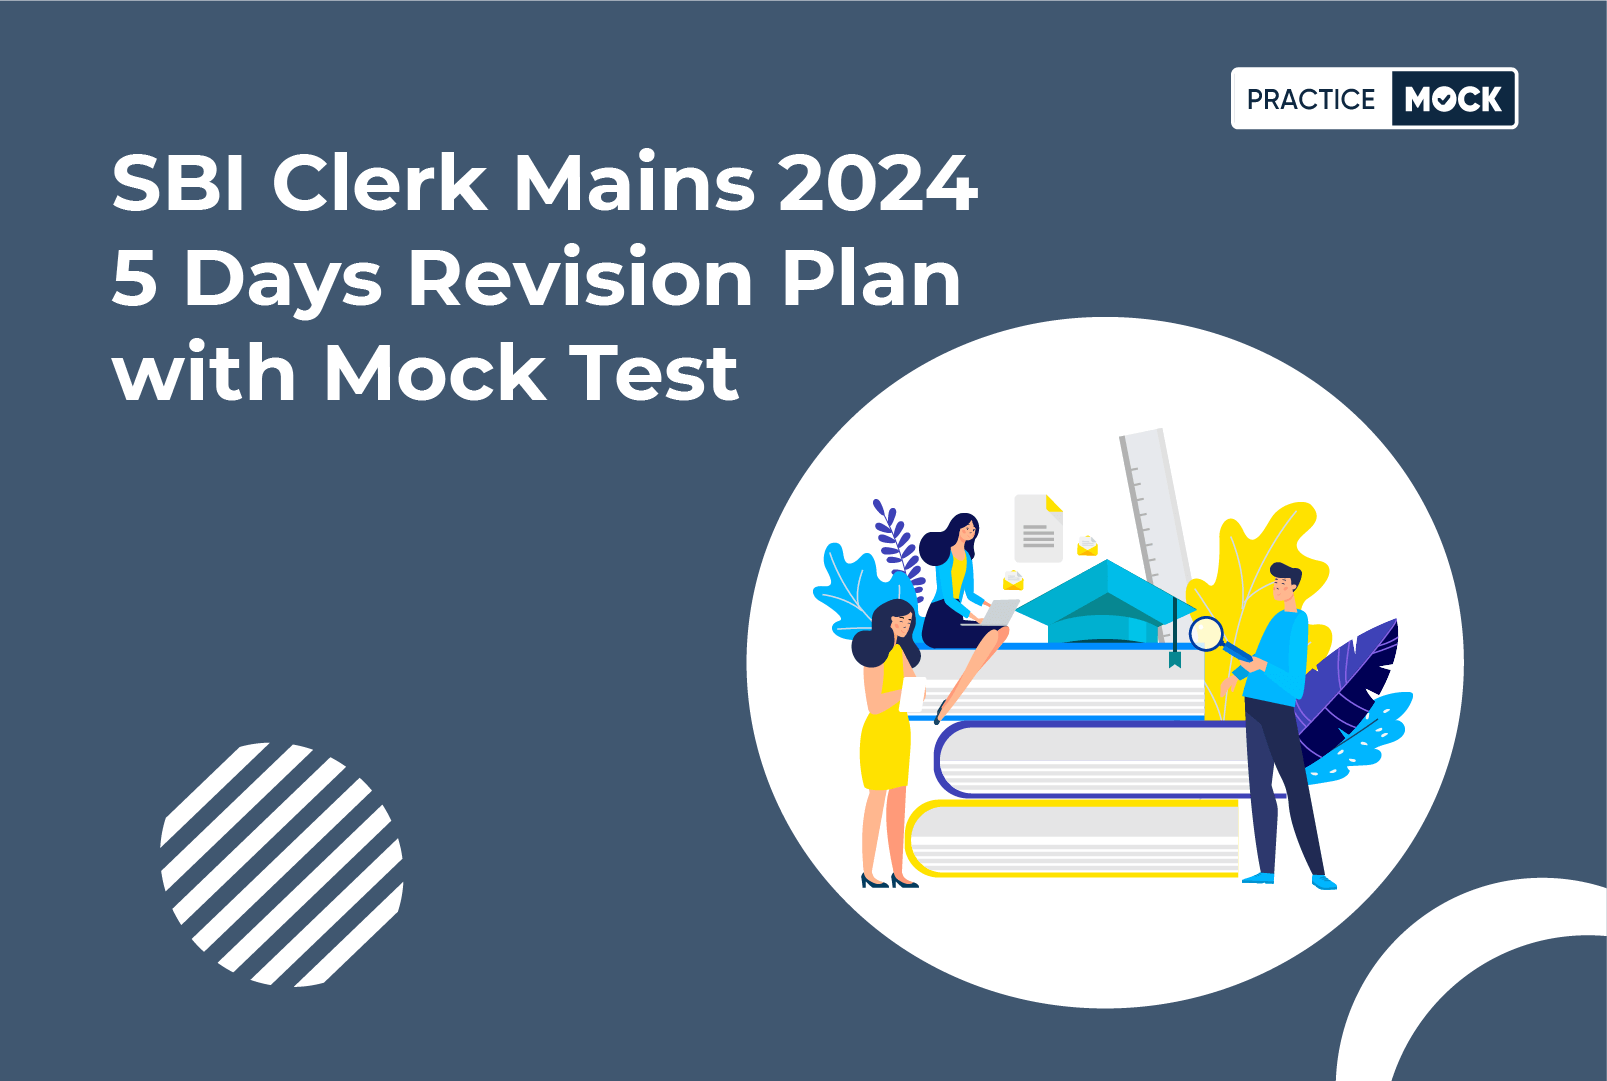 SBI Clerk Mains 2024 5 Days Revision Plan with Mock Test